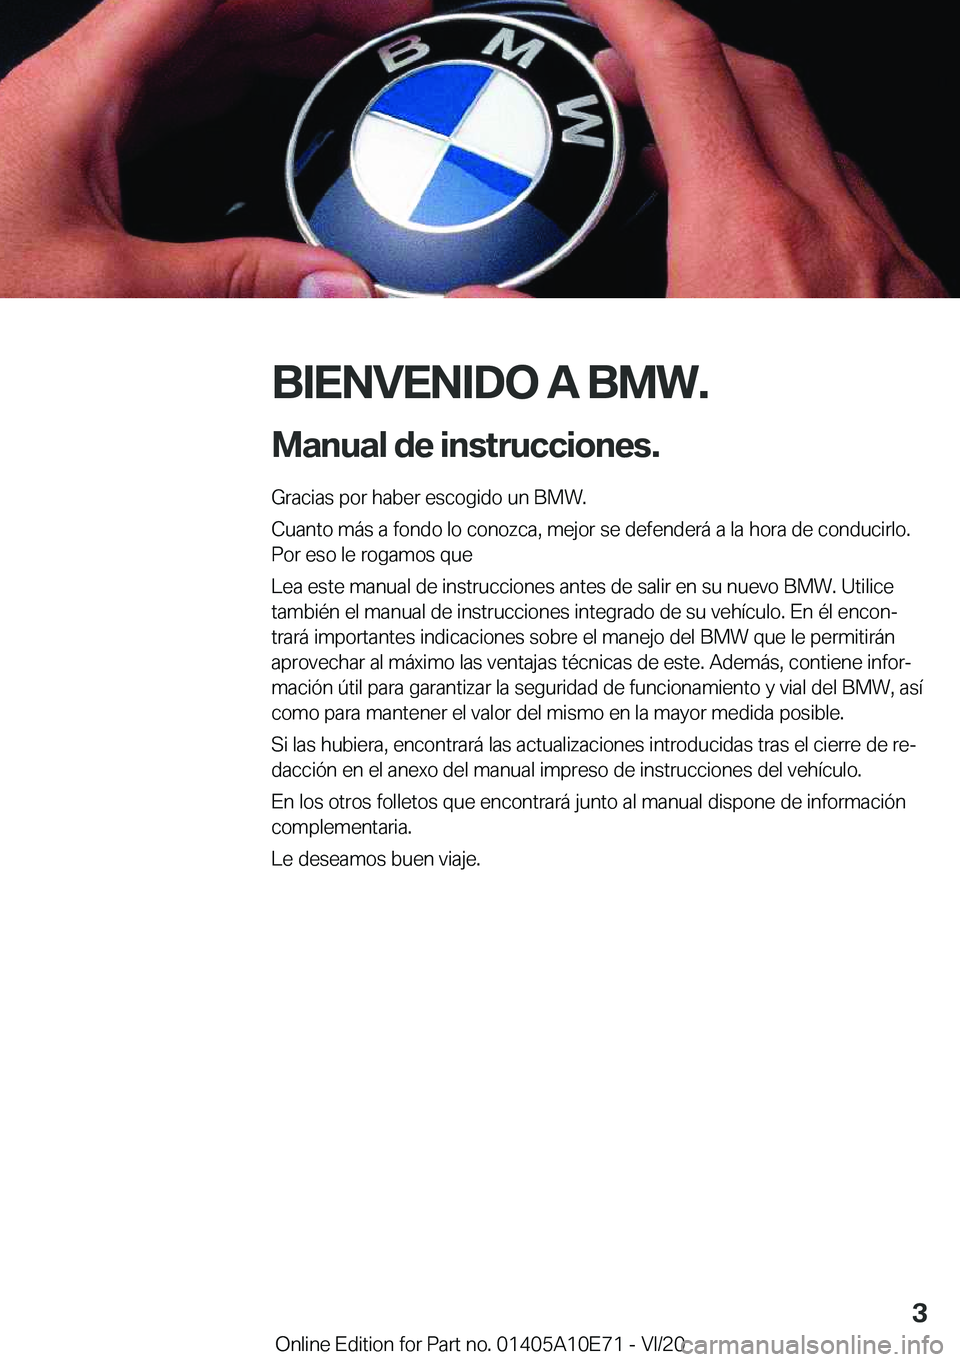 BMW X3 2021  Manuales de Empleo (in Spanish) �B�I�E�N�V�E�N�I�D�O��A��B�M�W�.
�M�a�n�u�a�l��d�e��i�n�s�t�r�u�c�c�i�o�n�e�s�. �G�r�a�c�i�a�s��p�o�r��h�a�b�e�r��e�s�c�o�g�i�d�o��u�n��B�M�W�.
�C�u�a�n�t�o��m�